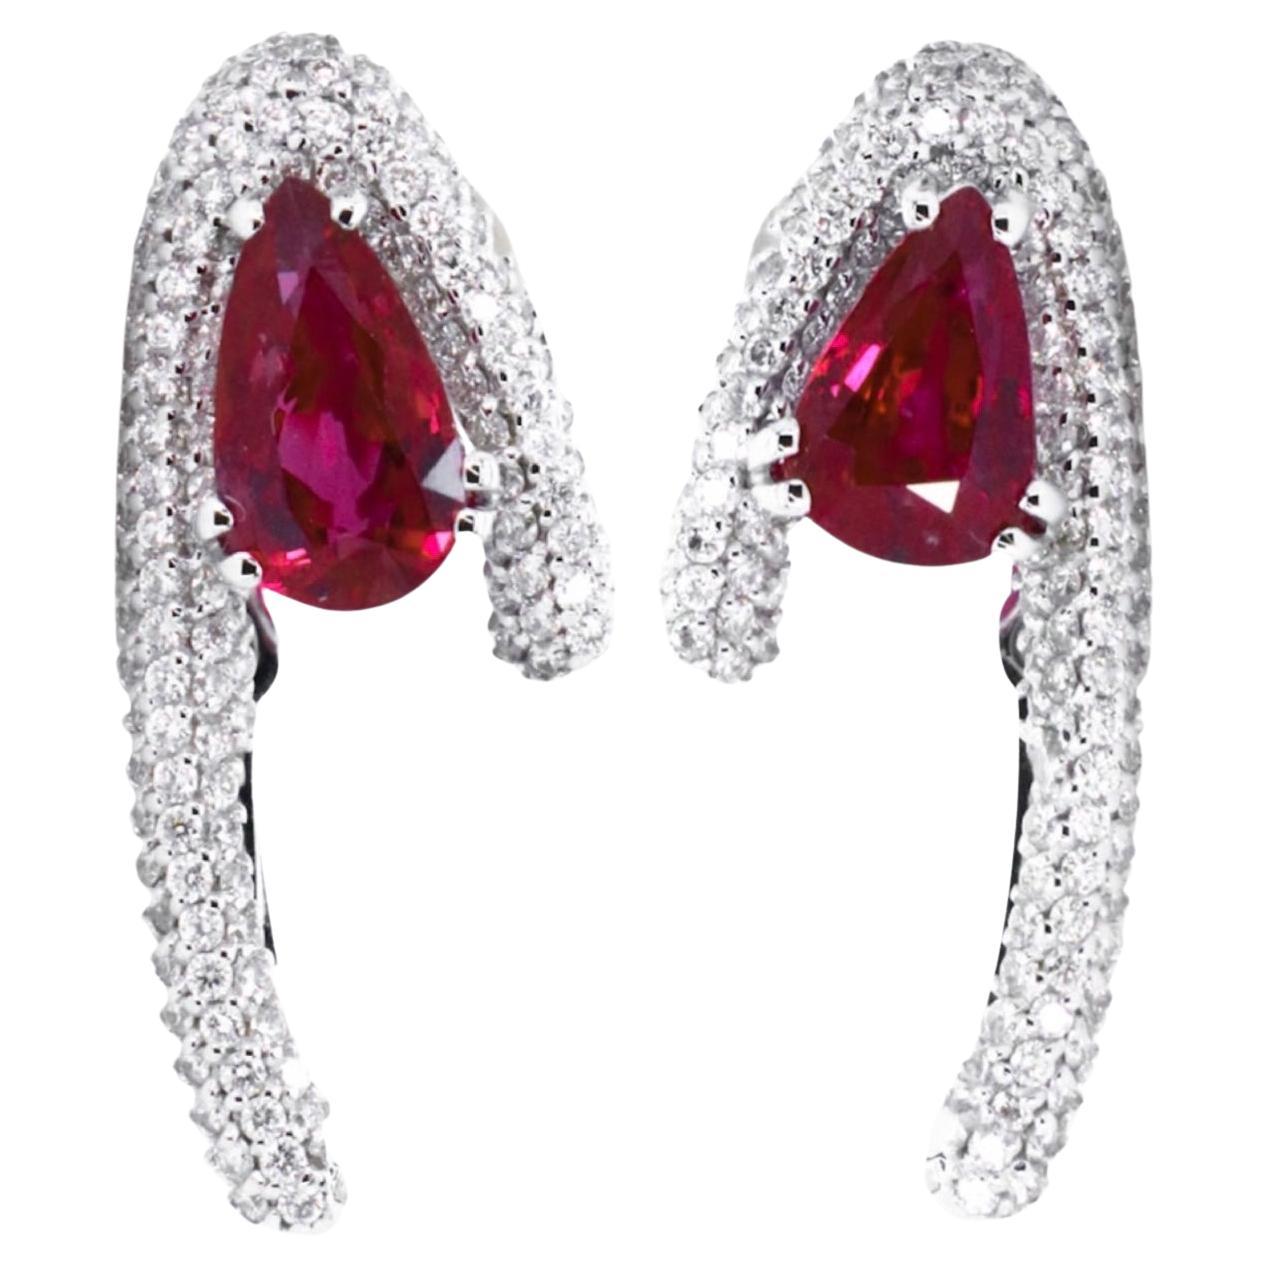 4 Karat unbehandelter Rubin Diamant 18Kt Gold Innovativer Verschluss verstärkende kühne Ohrringe